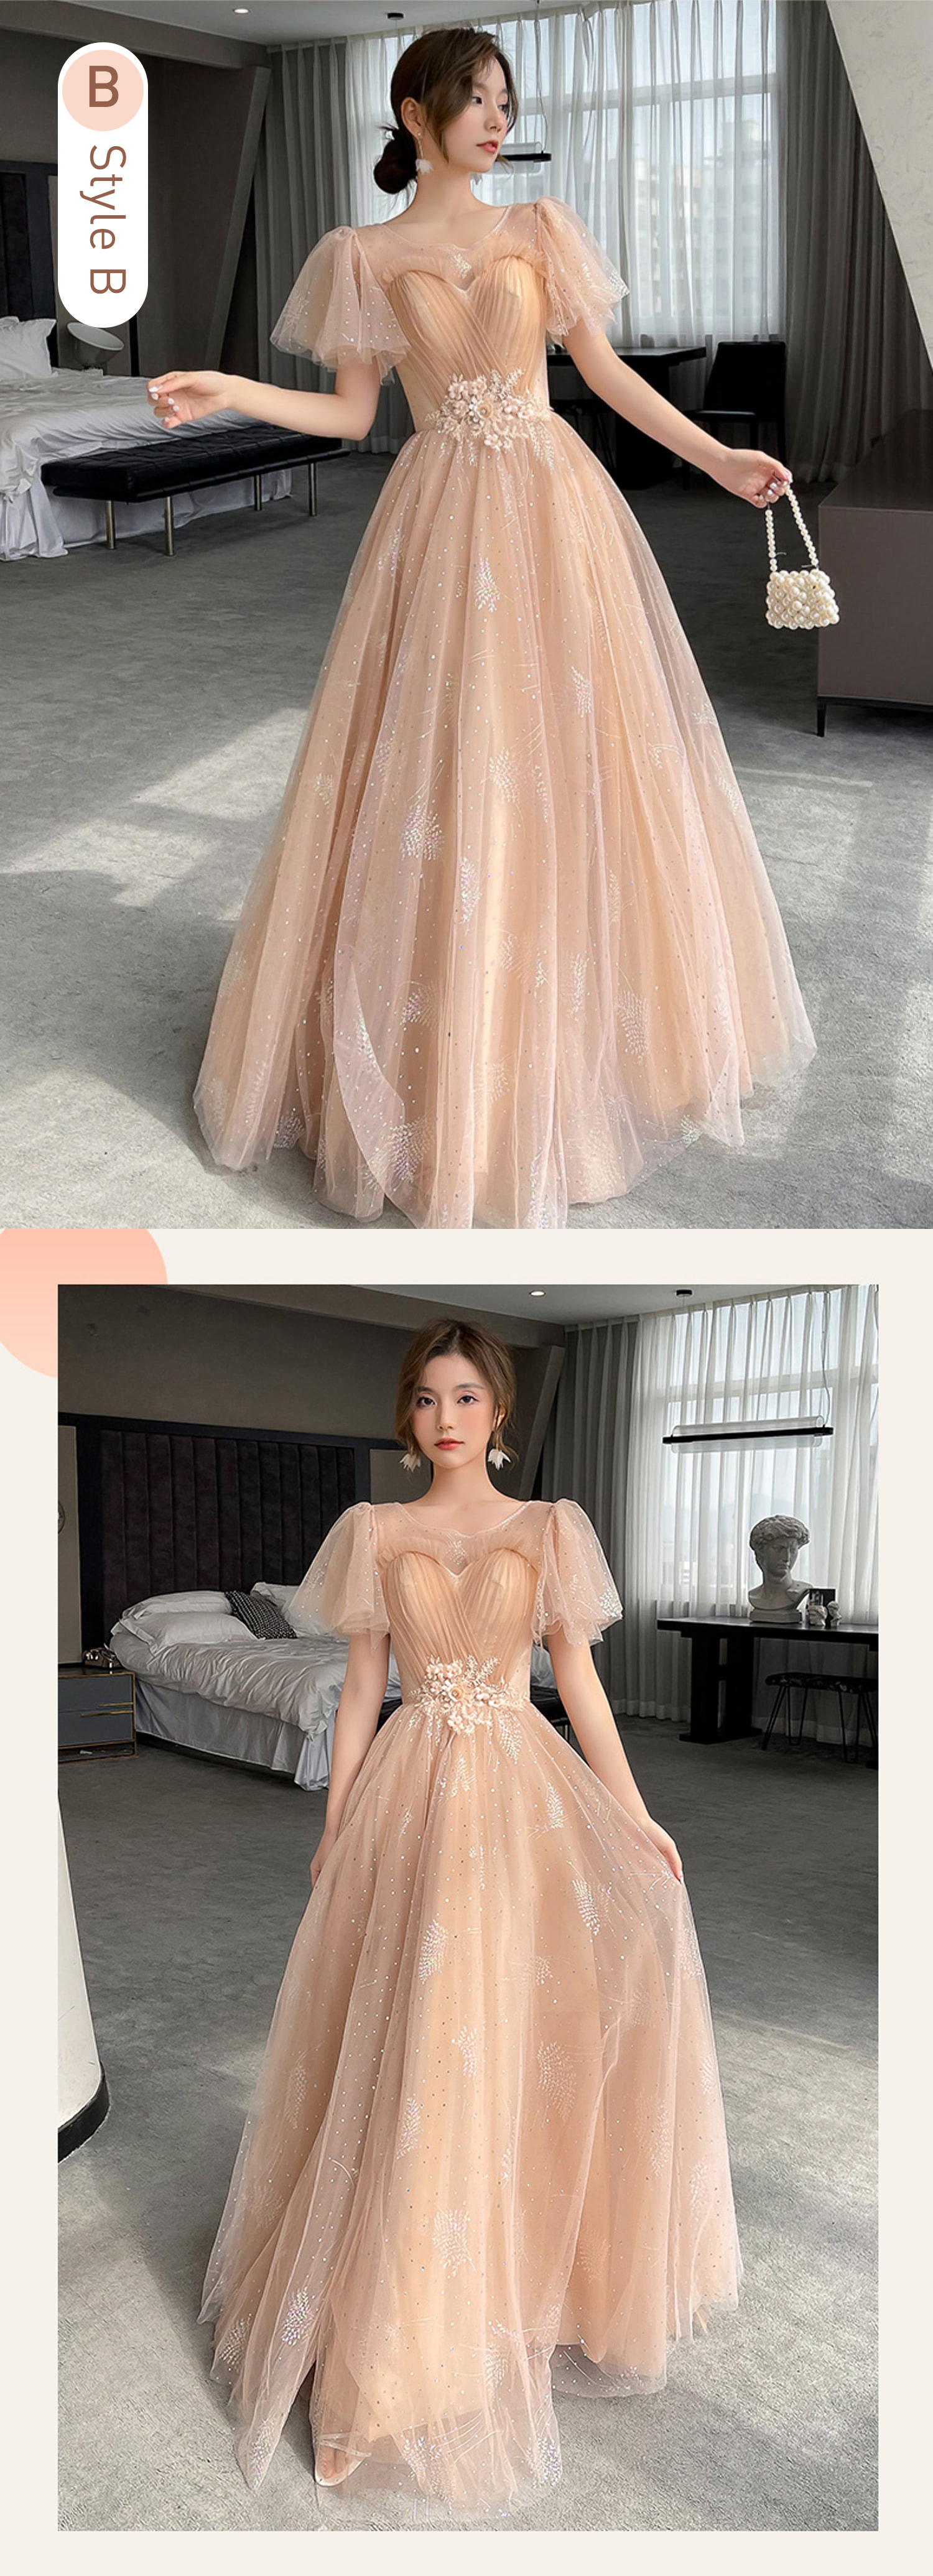 Fashion-Khaki-A-line-Bridal-Wedding-Party-Chiffon-Dress-for-Women18.jpg